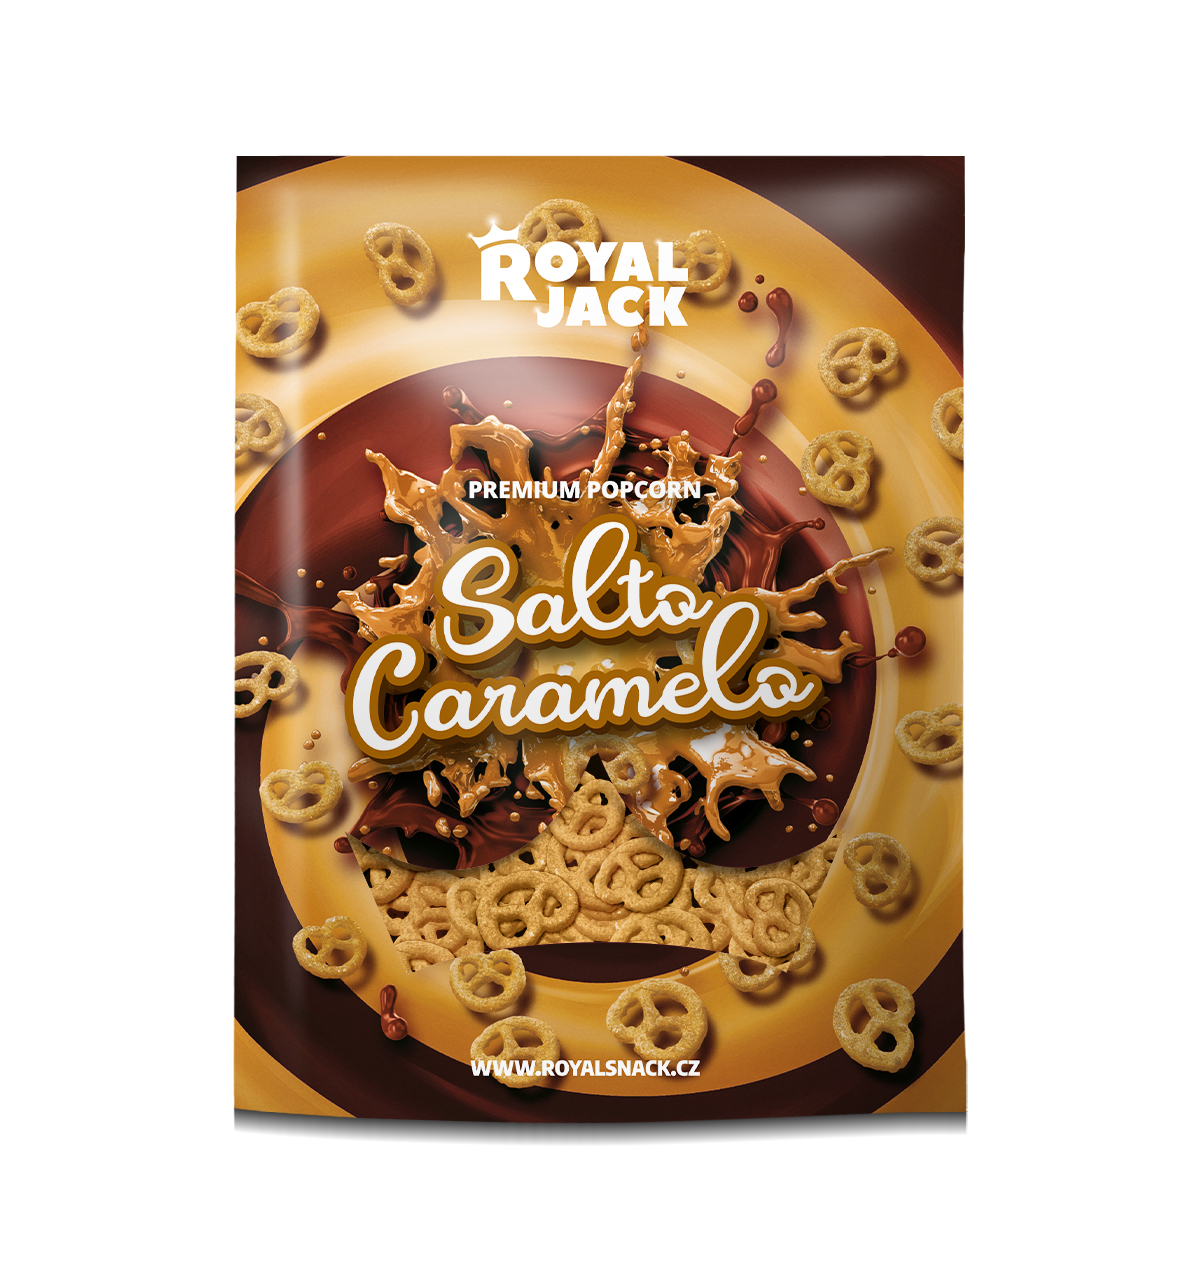 Royal Jack - sladké dobroty Royal Jack - Salto Caramelo by Stejk (preclíky v karamelové čokoládě)